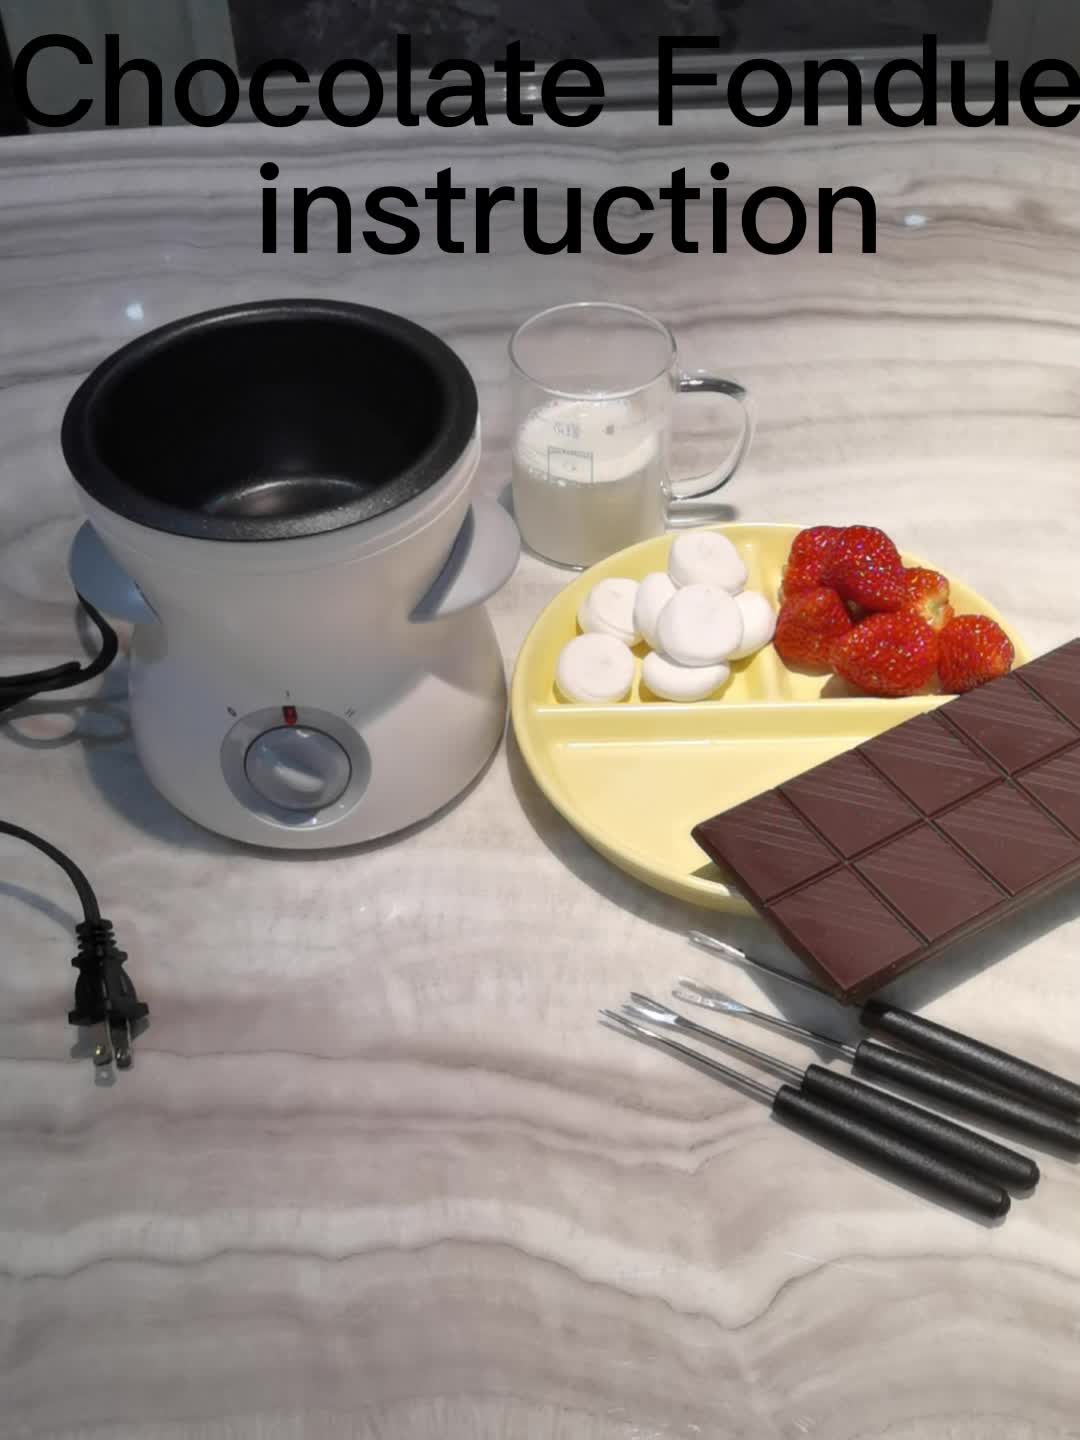 Jeanoko Olla eléctrica de chocolate para fundir fondue de chocolate con  doble olla herramienta de cocina, mini fondue para hacer dulces (amarillo)